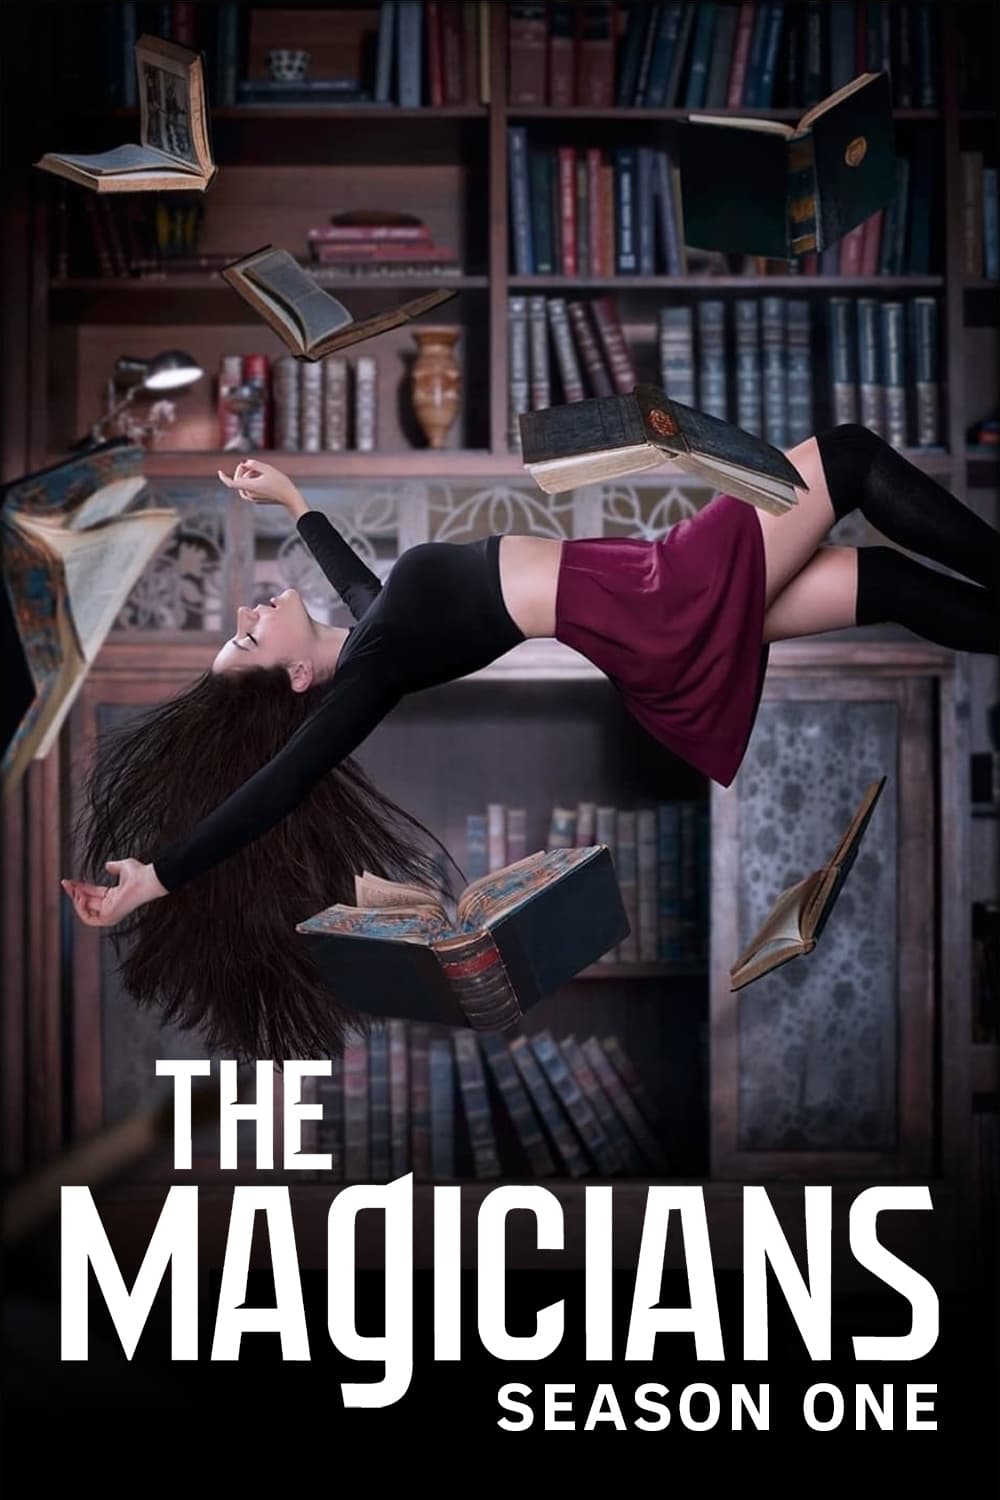 The Magicians Season 1